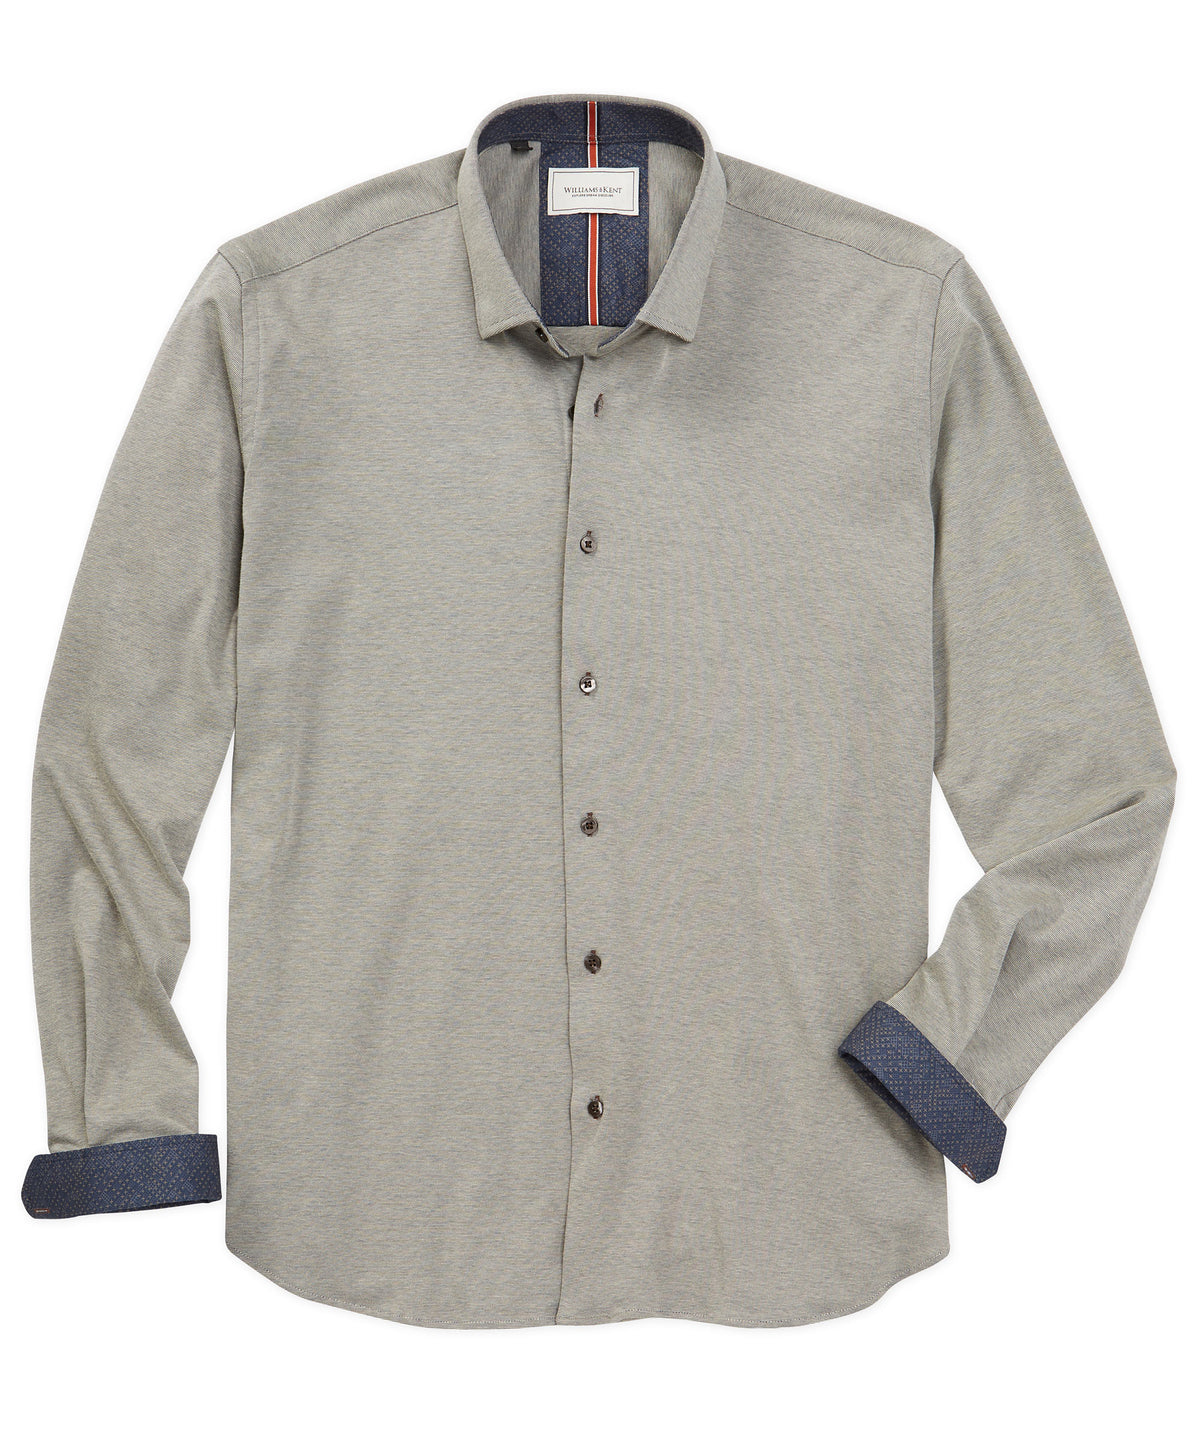 Mercerized Pima Cotton Textured Knit Long Sleeve Sport Shirt